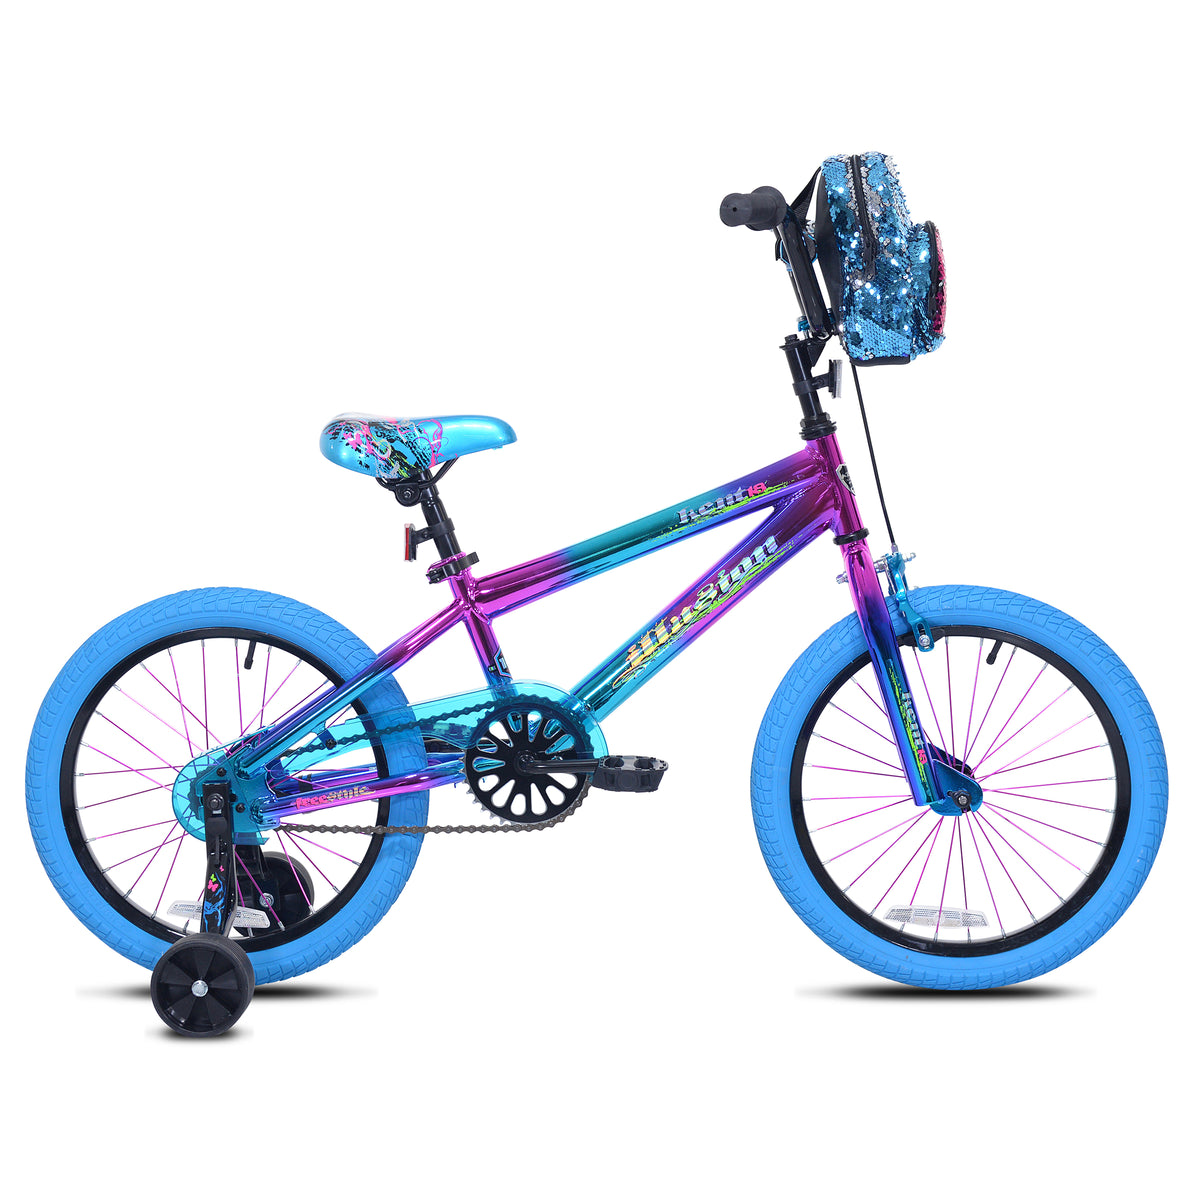 18" Kent Illusion | BMX Bike for Kids Ages 5-8